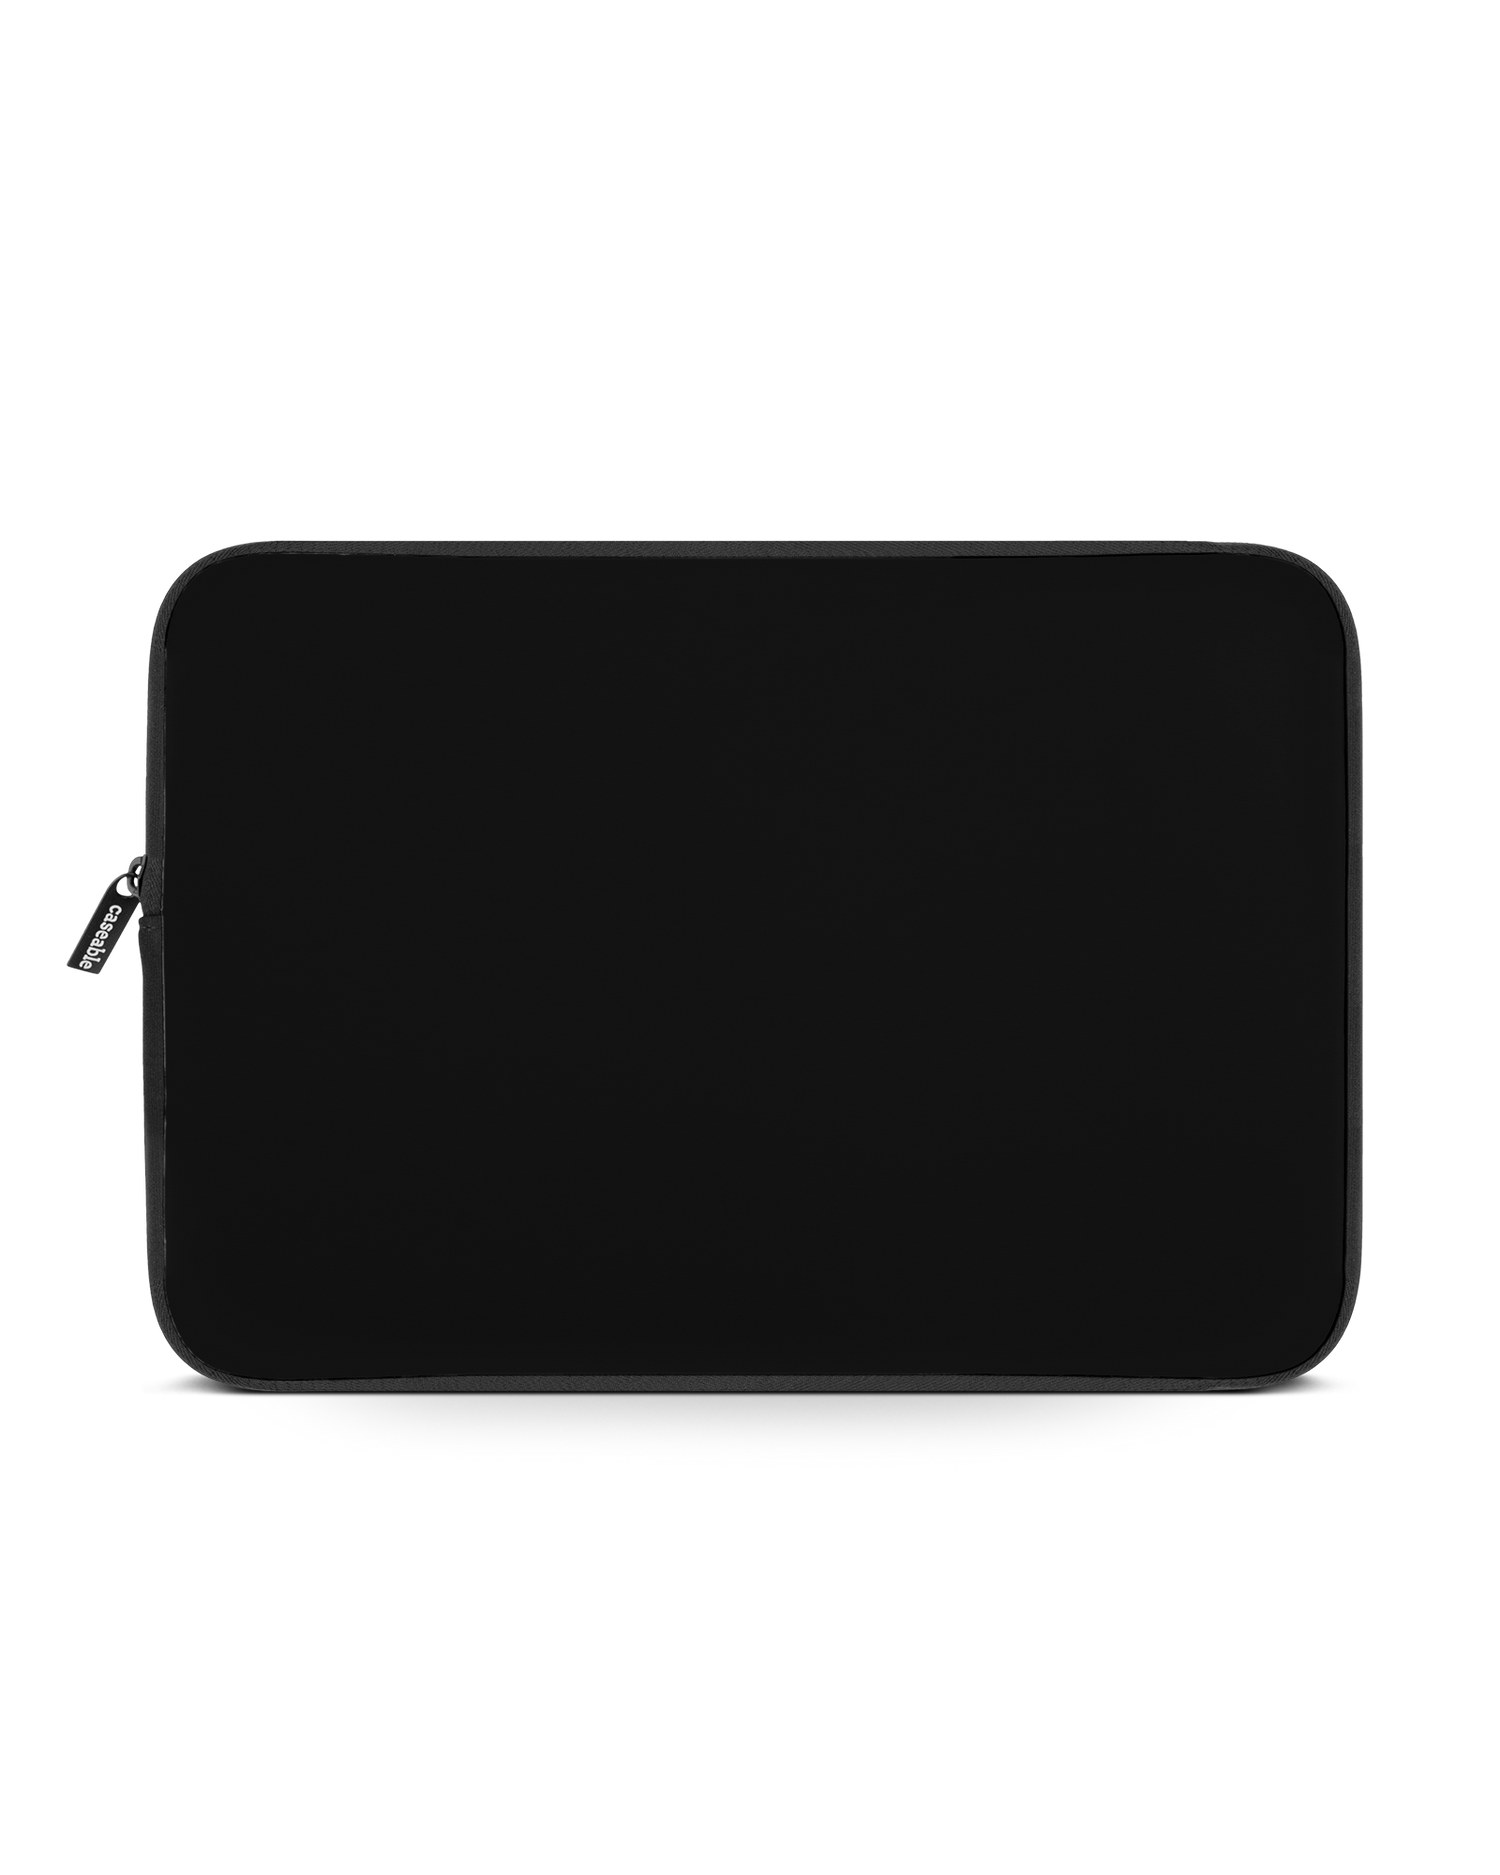 BLACK Laptop Case 15-16 inch: Front View